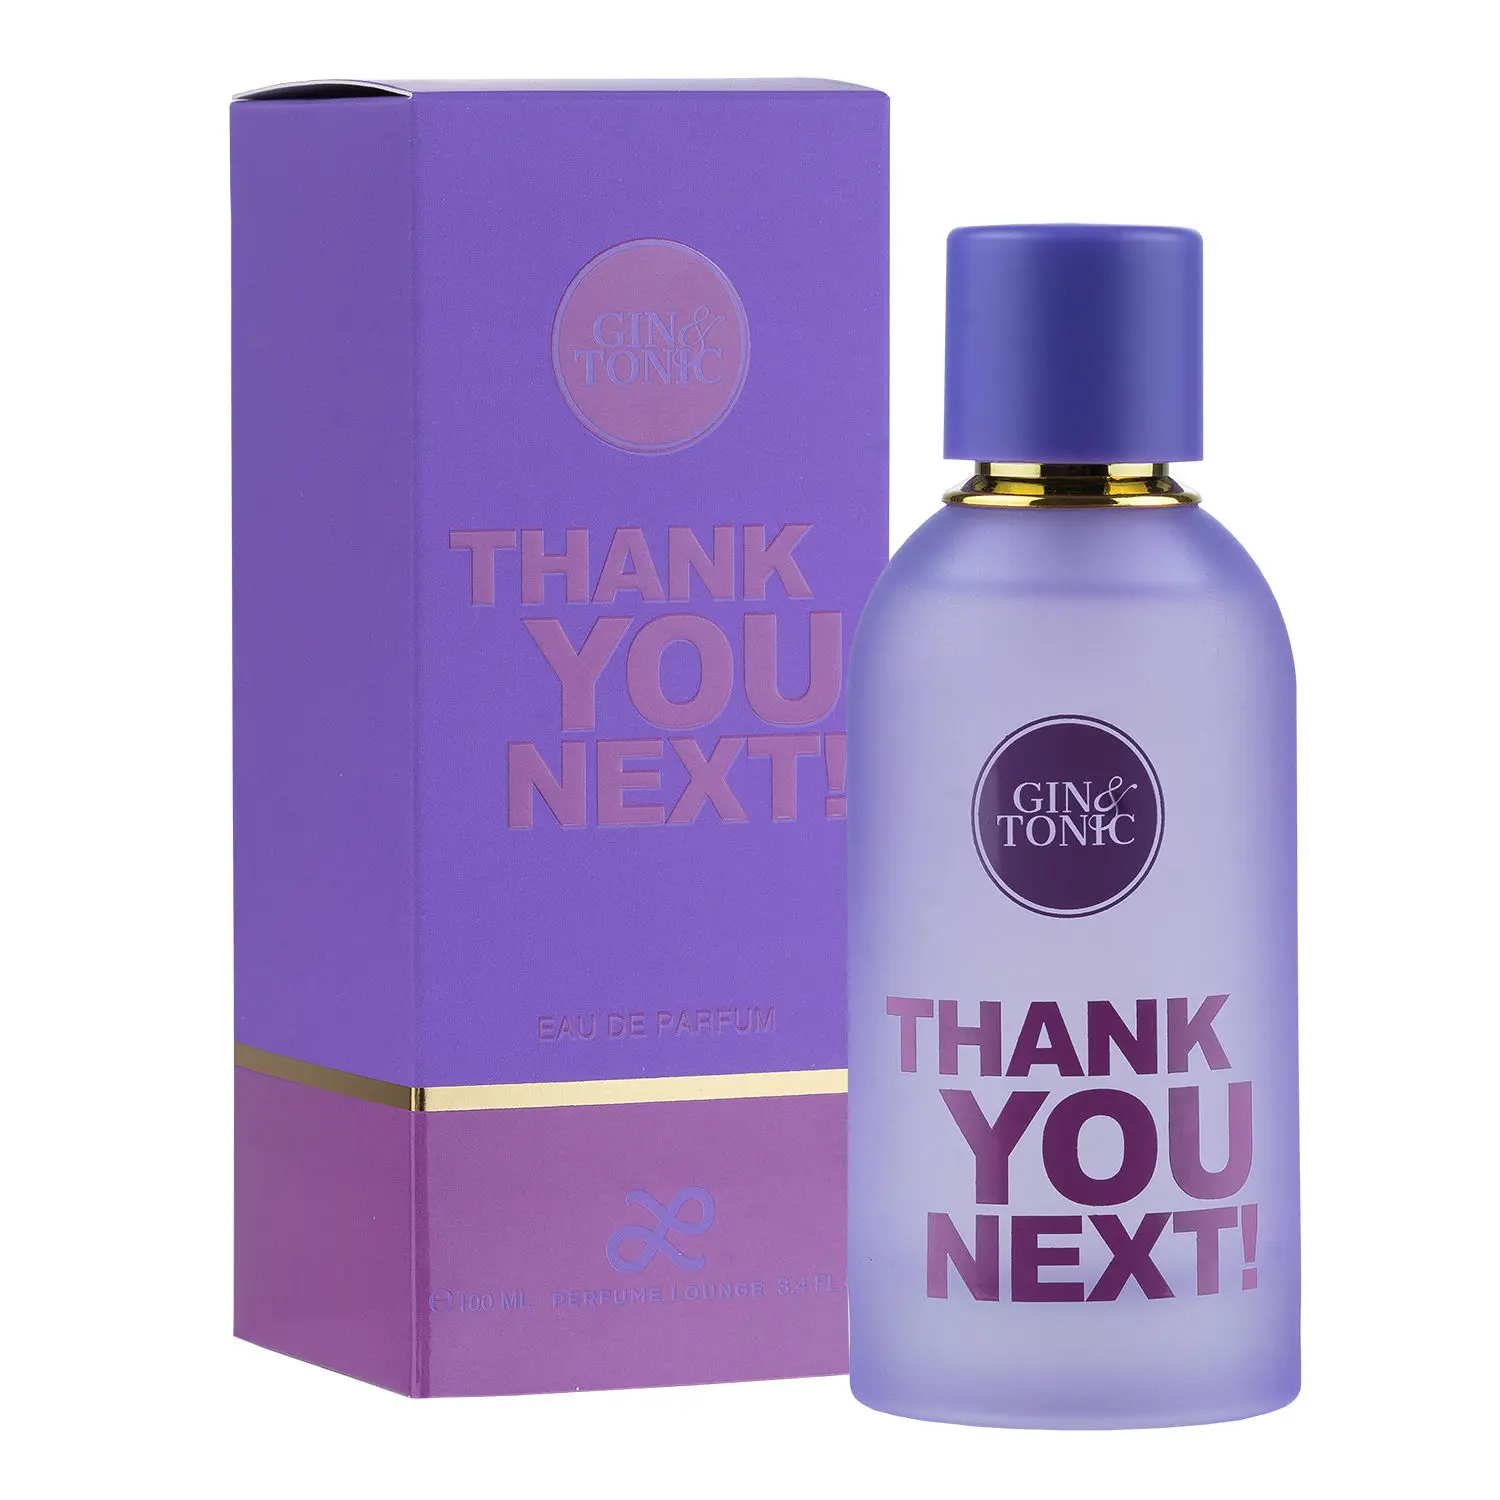 Gin & Tonic - Thank You Next by Perfume Lounge | Eau De Parfum | Women’s Perfume Long-lasting Fresh & Floral Perfume 100 ml